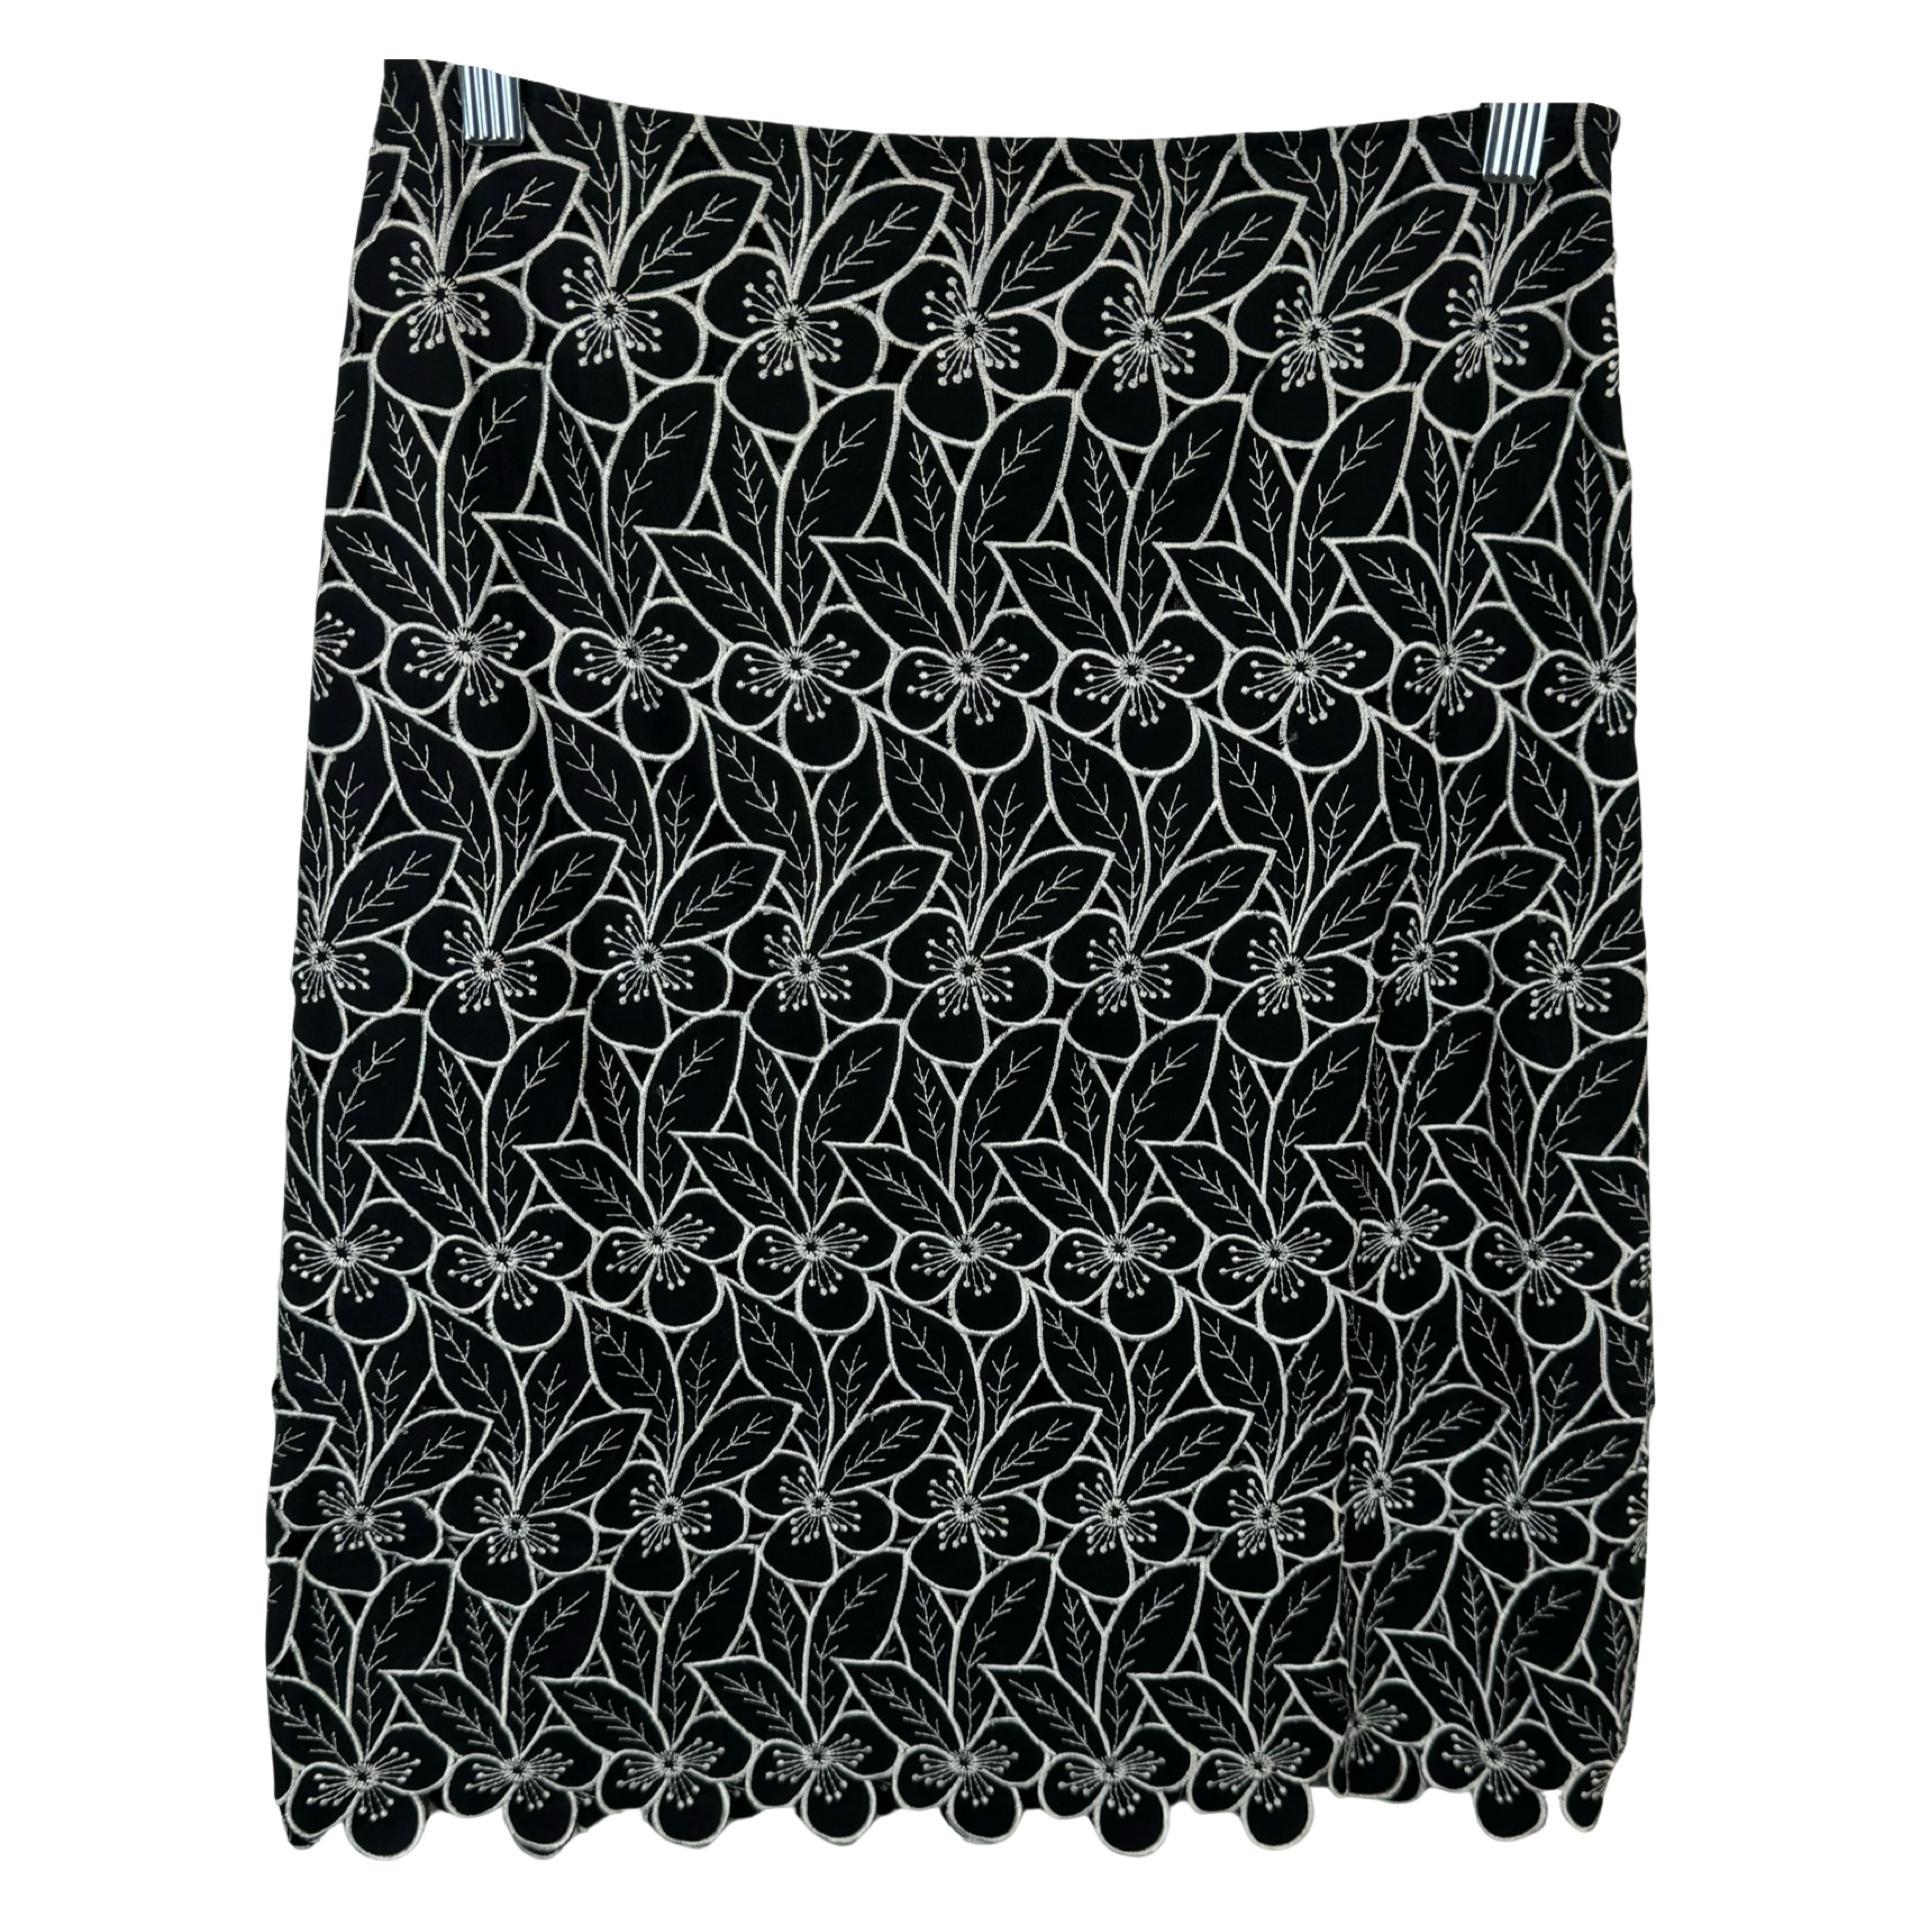 Vivienne Tam Embroidered Floral Pattern Skirt